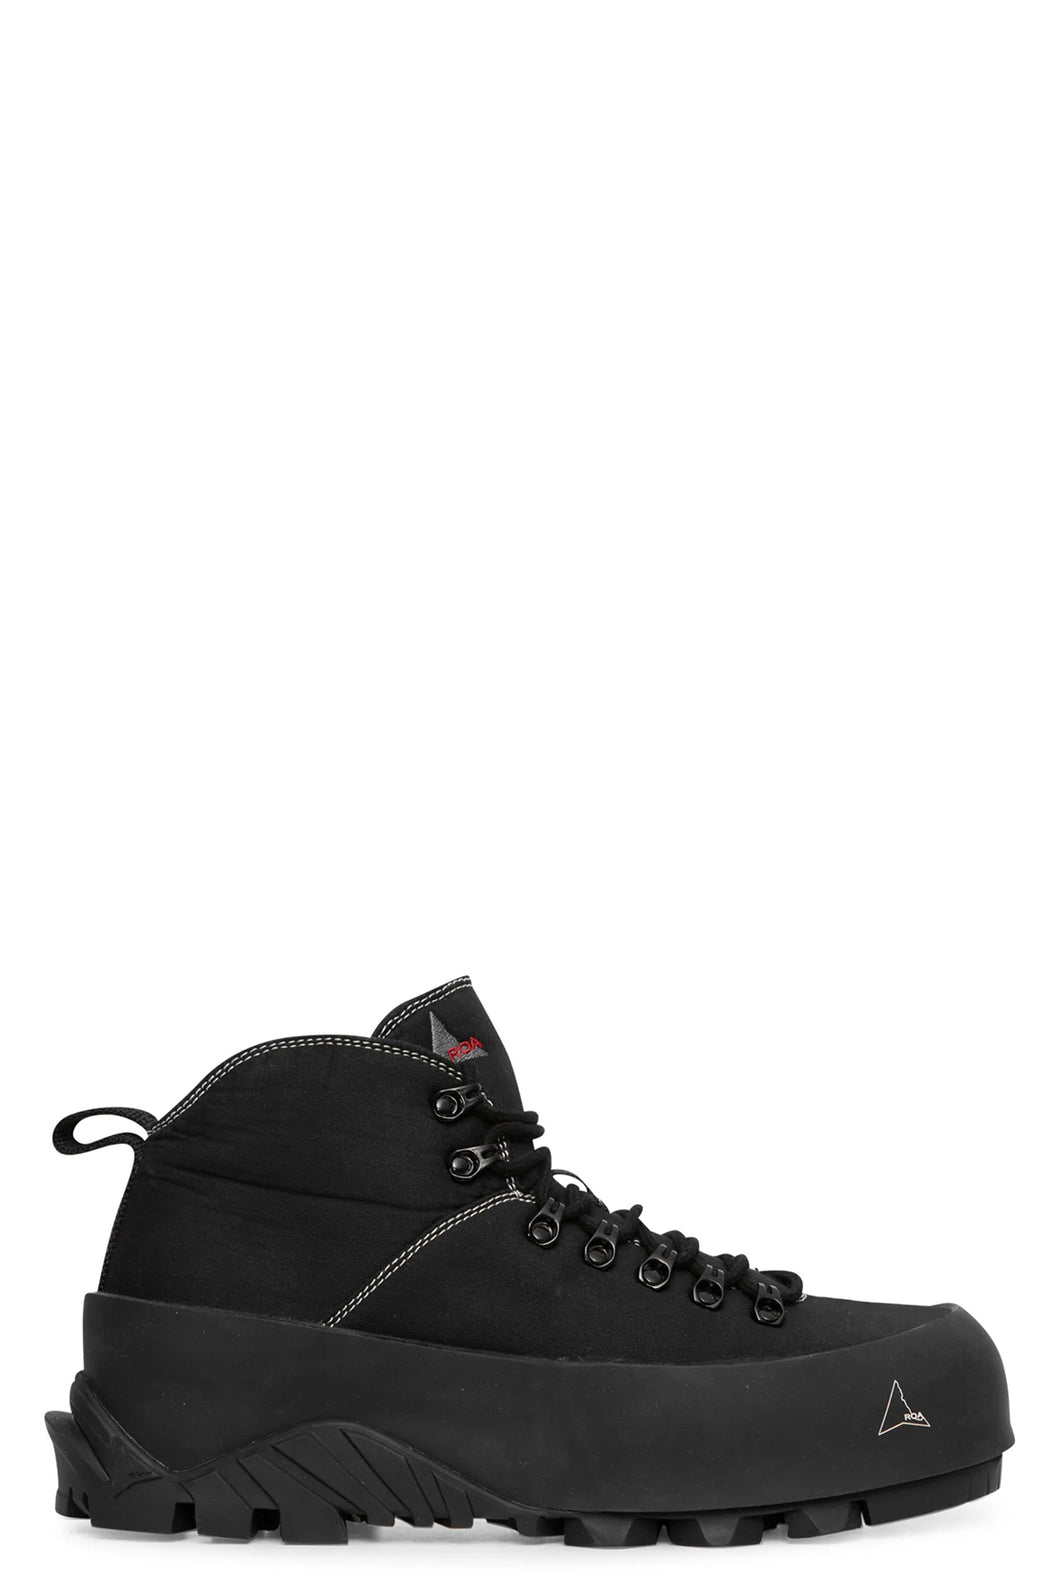 Black CVO Boots